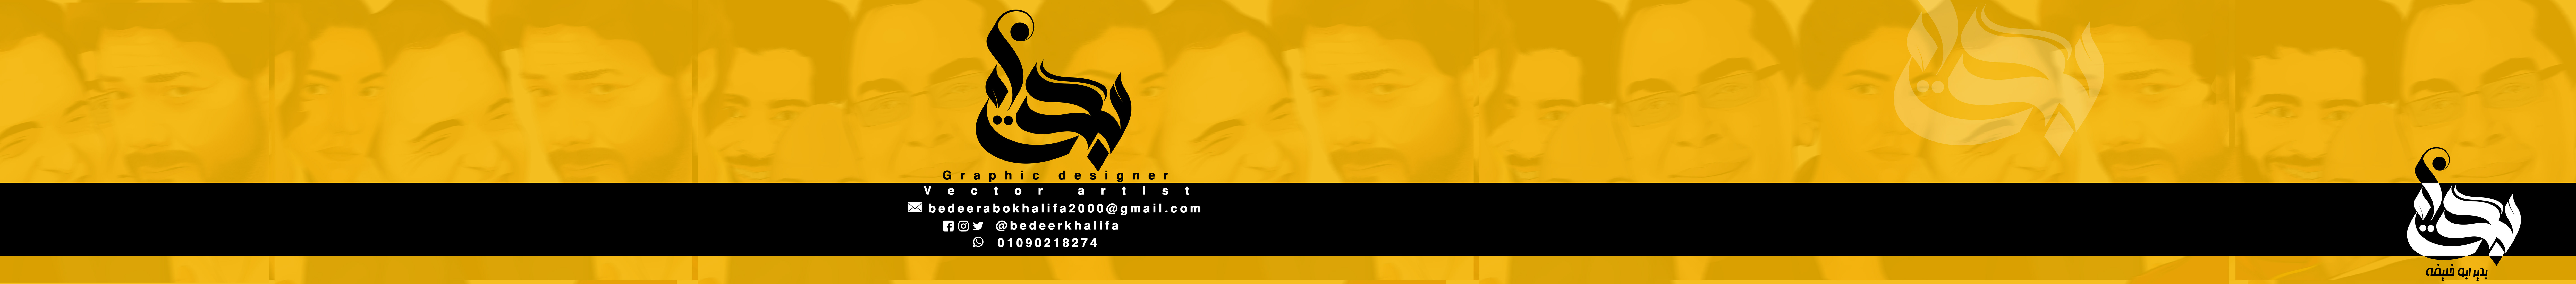 Banner de perfil de Bedeer Abo-Khalifa